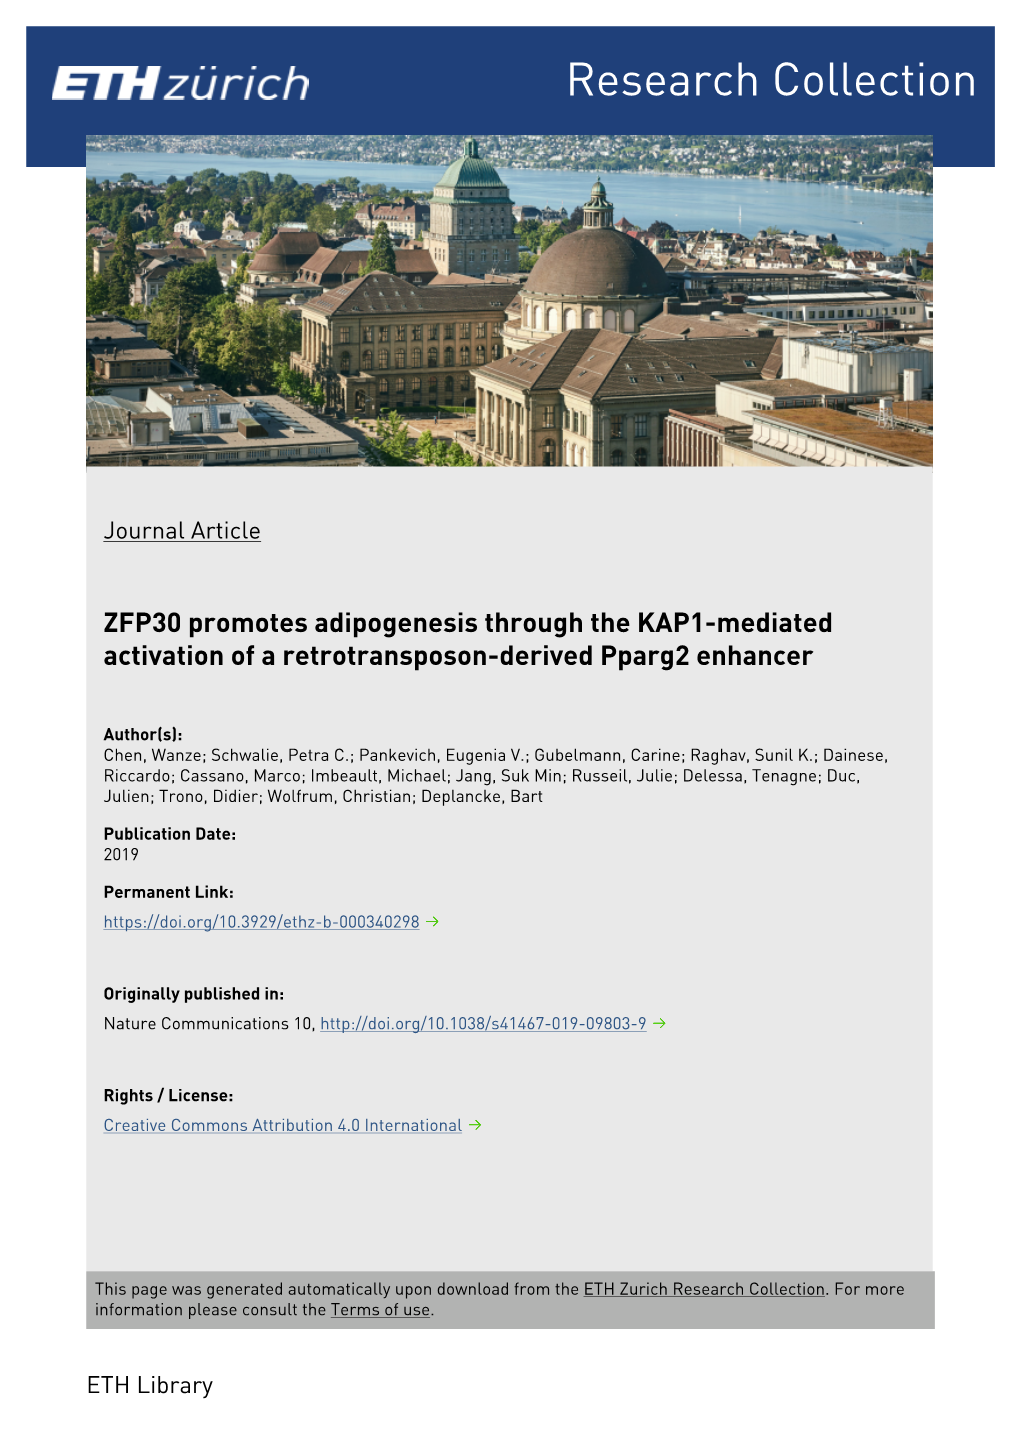 ZFP30 Promotes Adipogenesis Through the KAP1-Mediated Activation of a Retrotransposon-Derived Pparg2 Enhancer